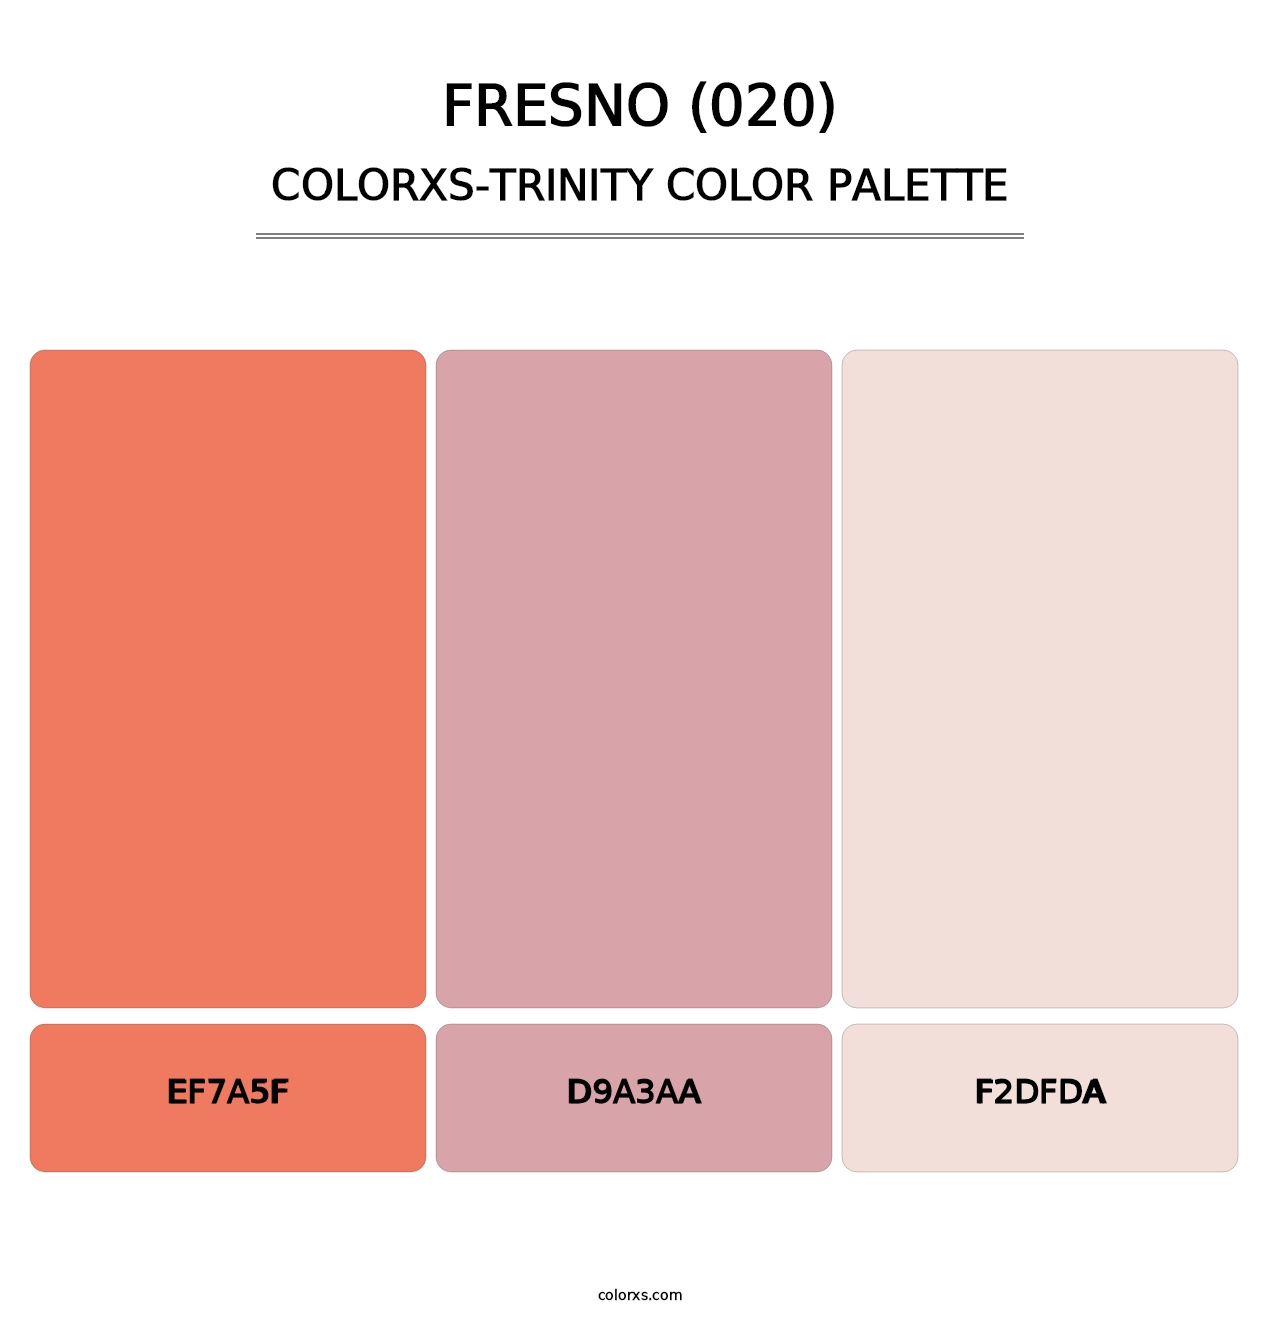 Fresno (020) - Colorxs Trinity Palette